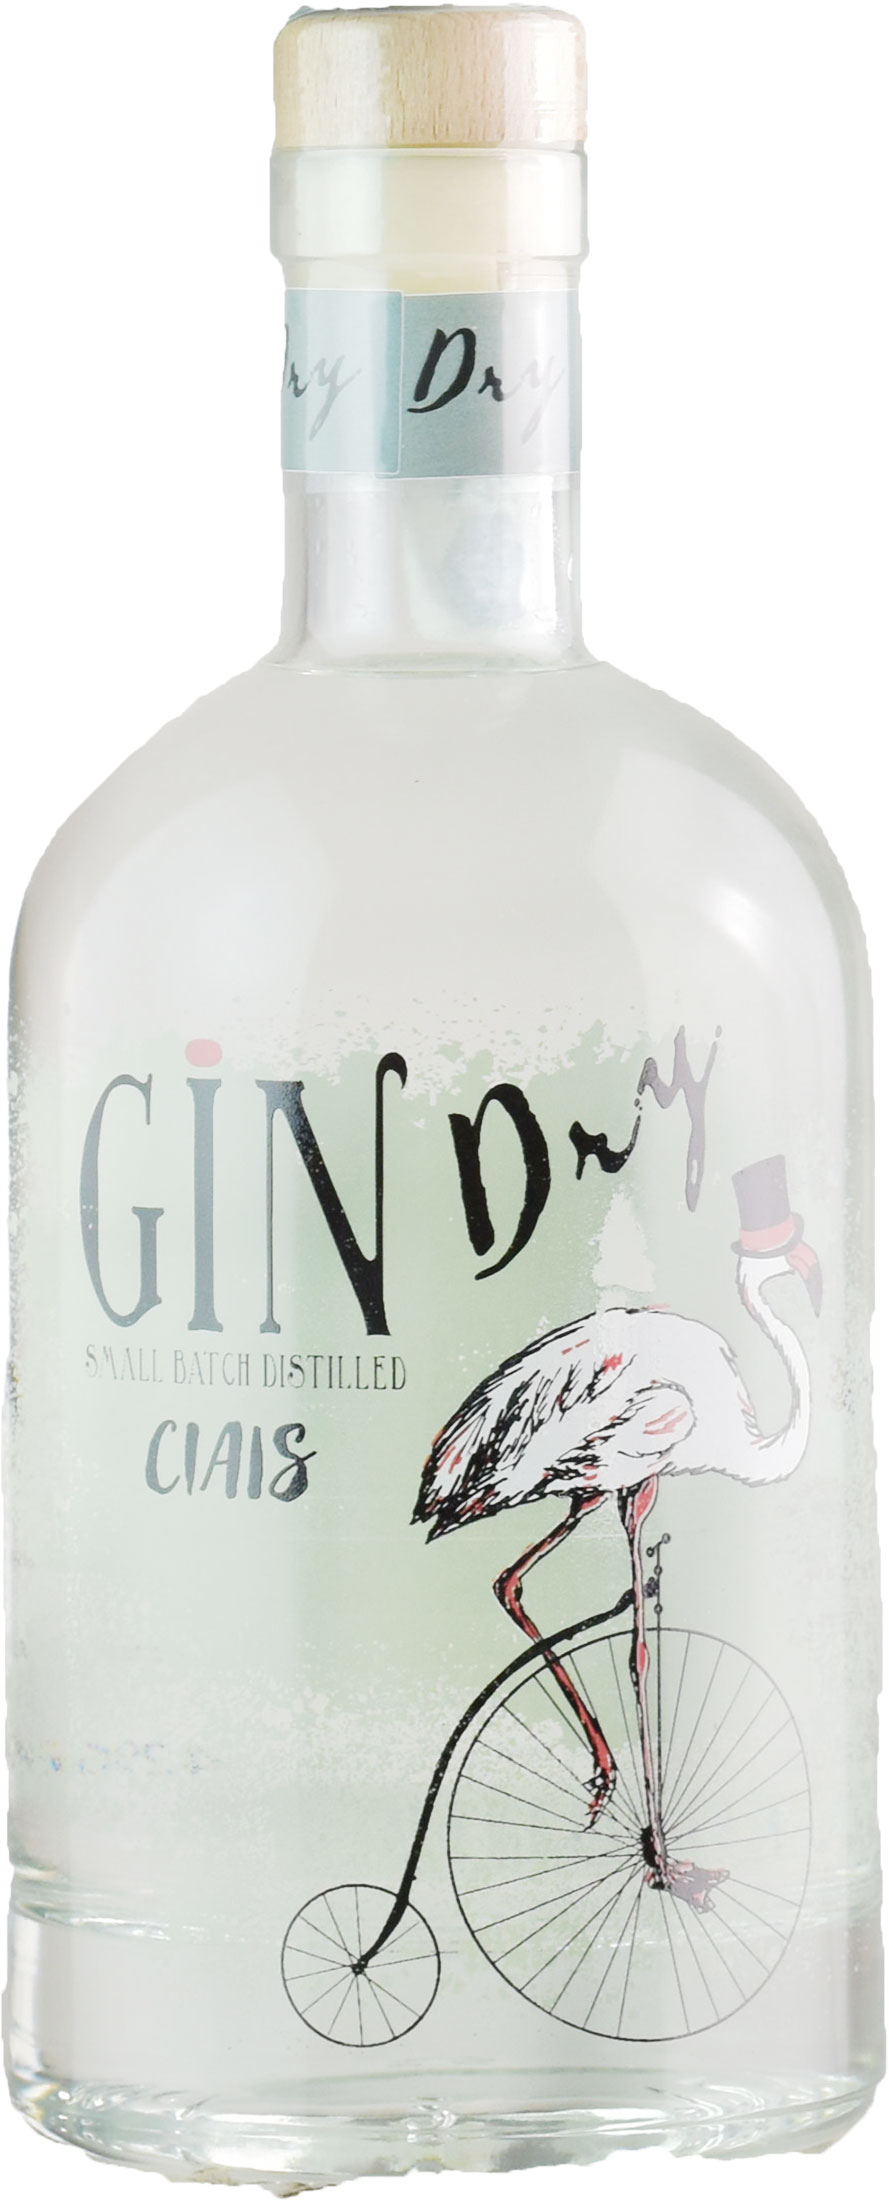 Bordiga Gin Premium Dry Ciais 0.7L